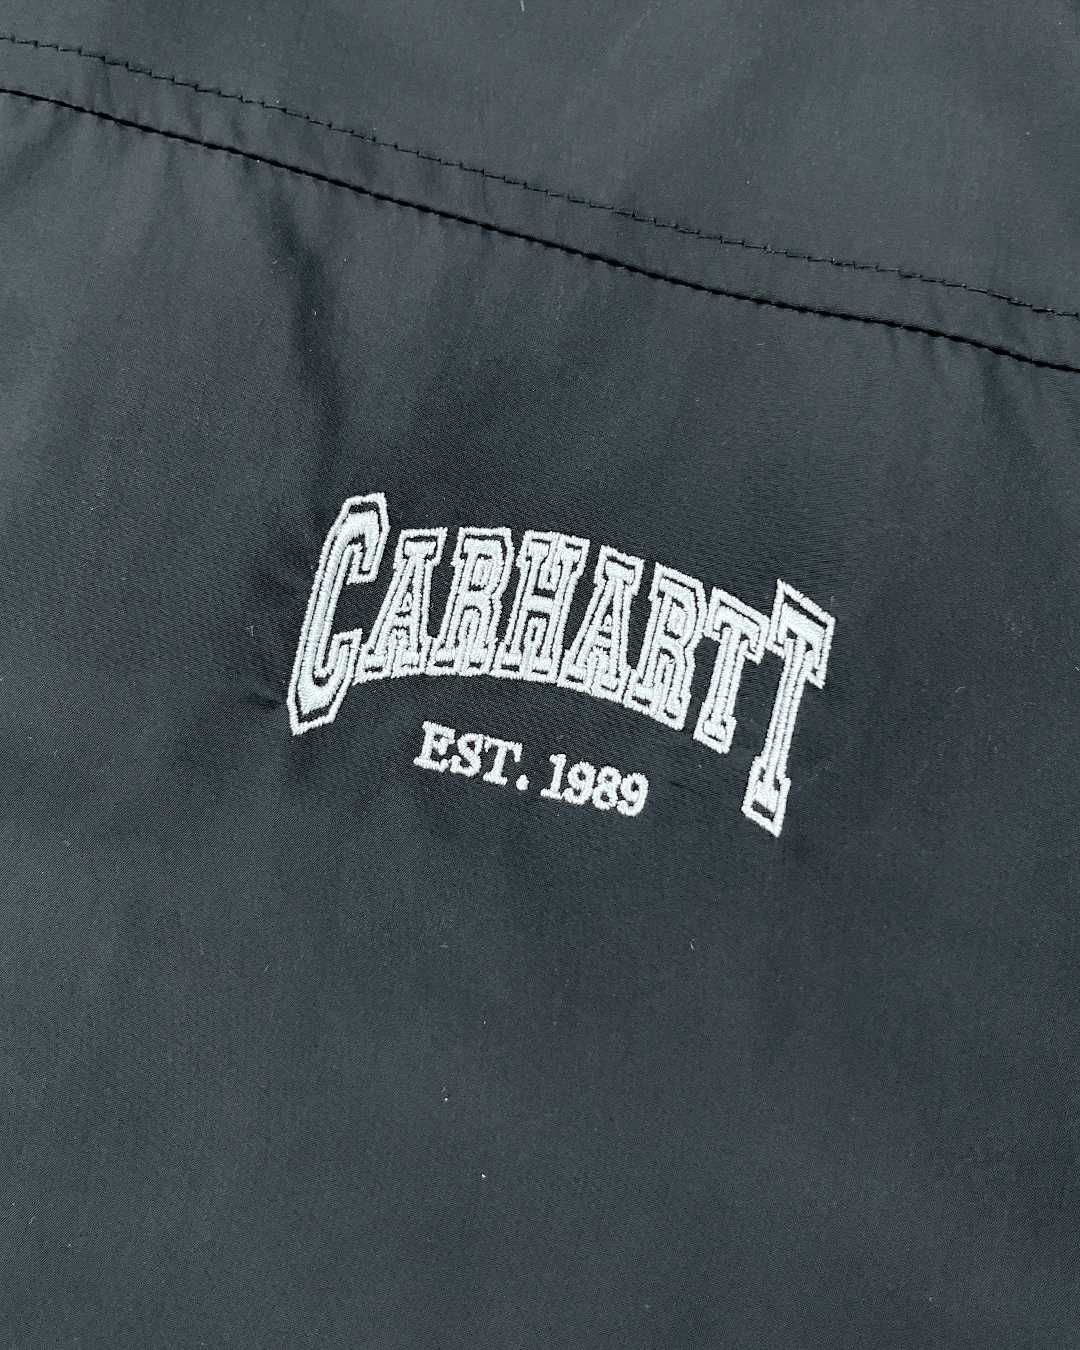 Куртка Carhartt WIP Dangle Jacket Black